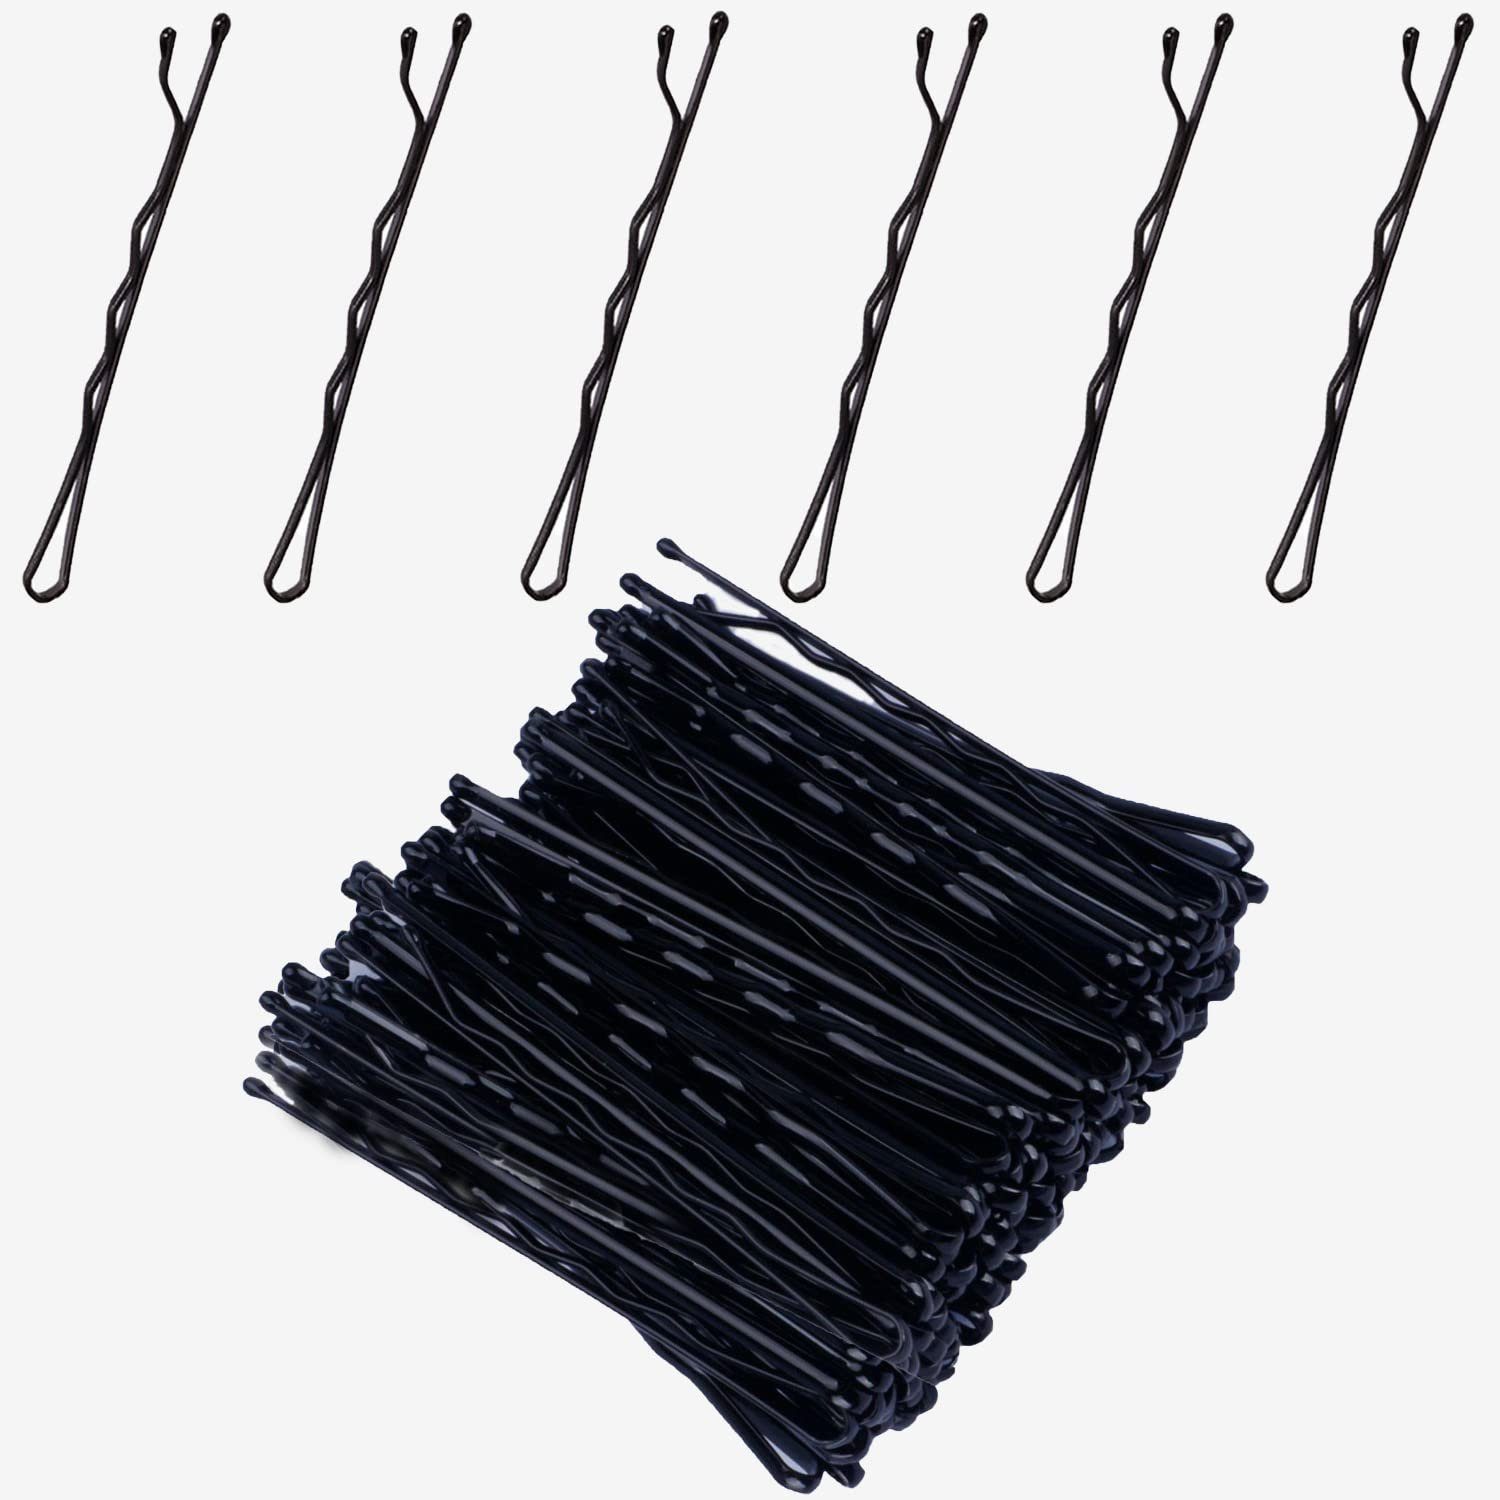 WaKuKa Diadem Bobby Metal Hairpins 100 Bun Pins for Girls' Hair Accessories